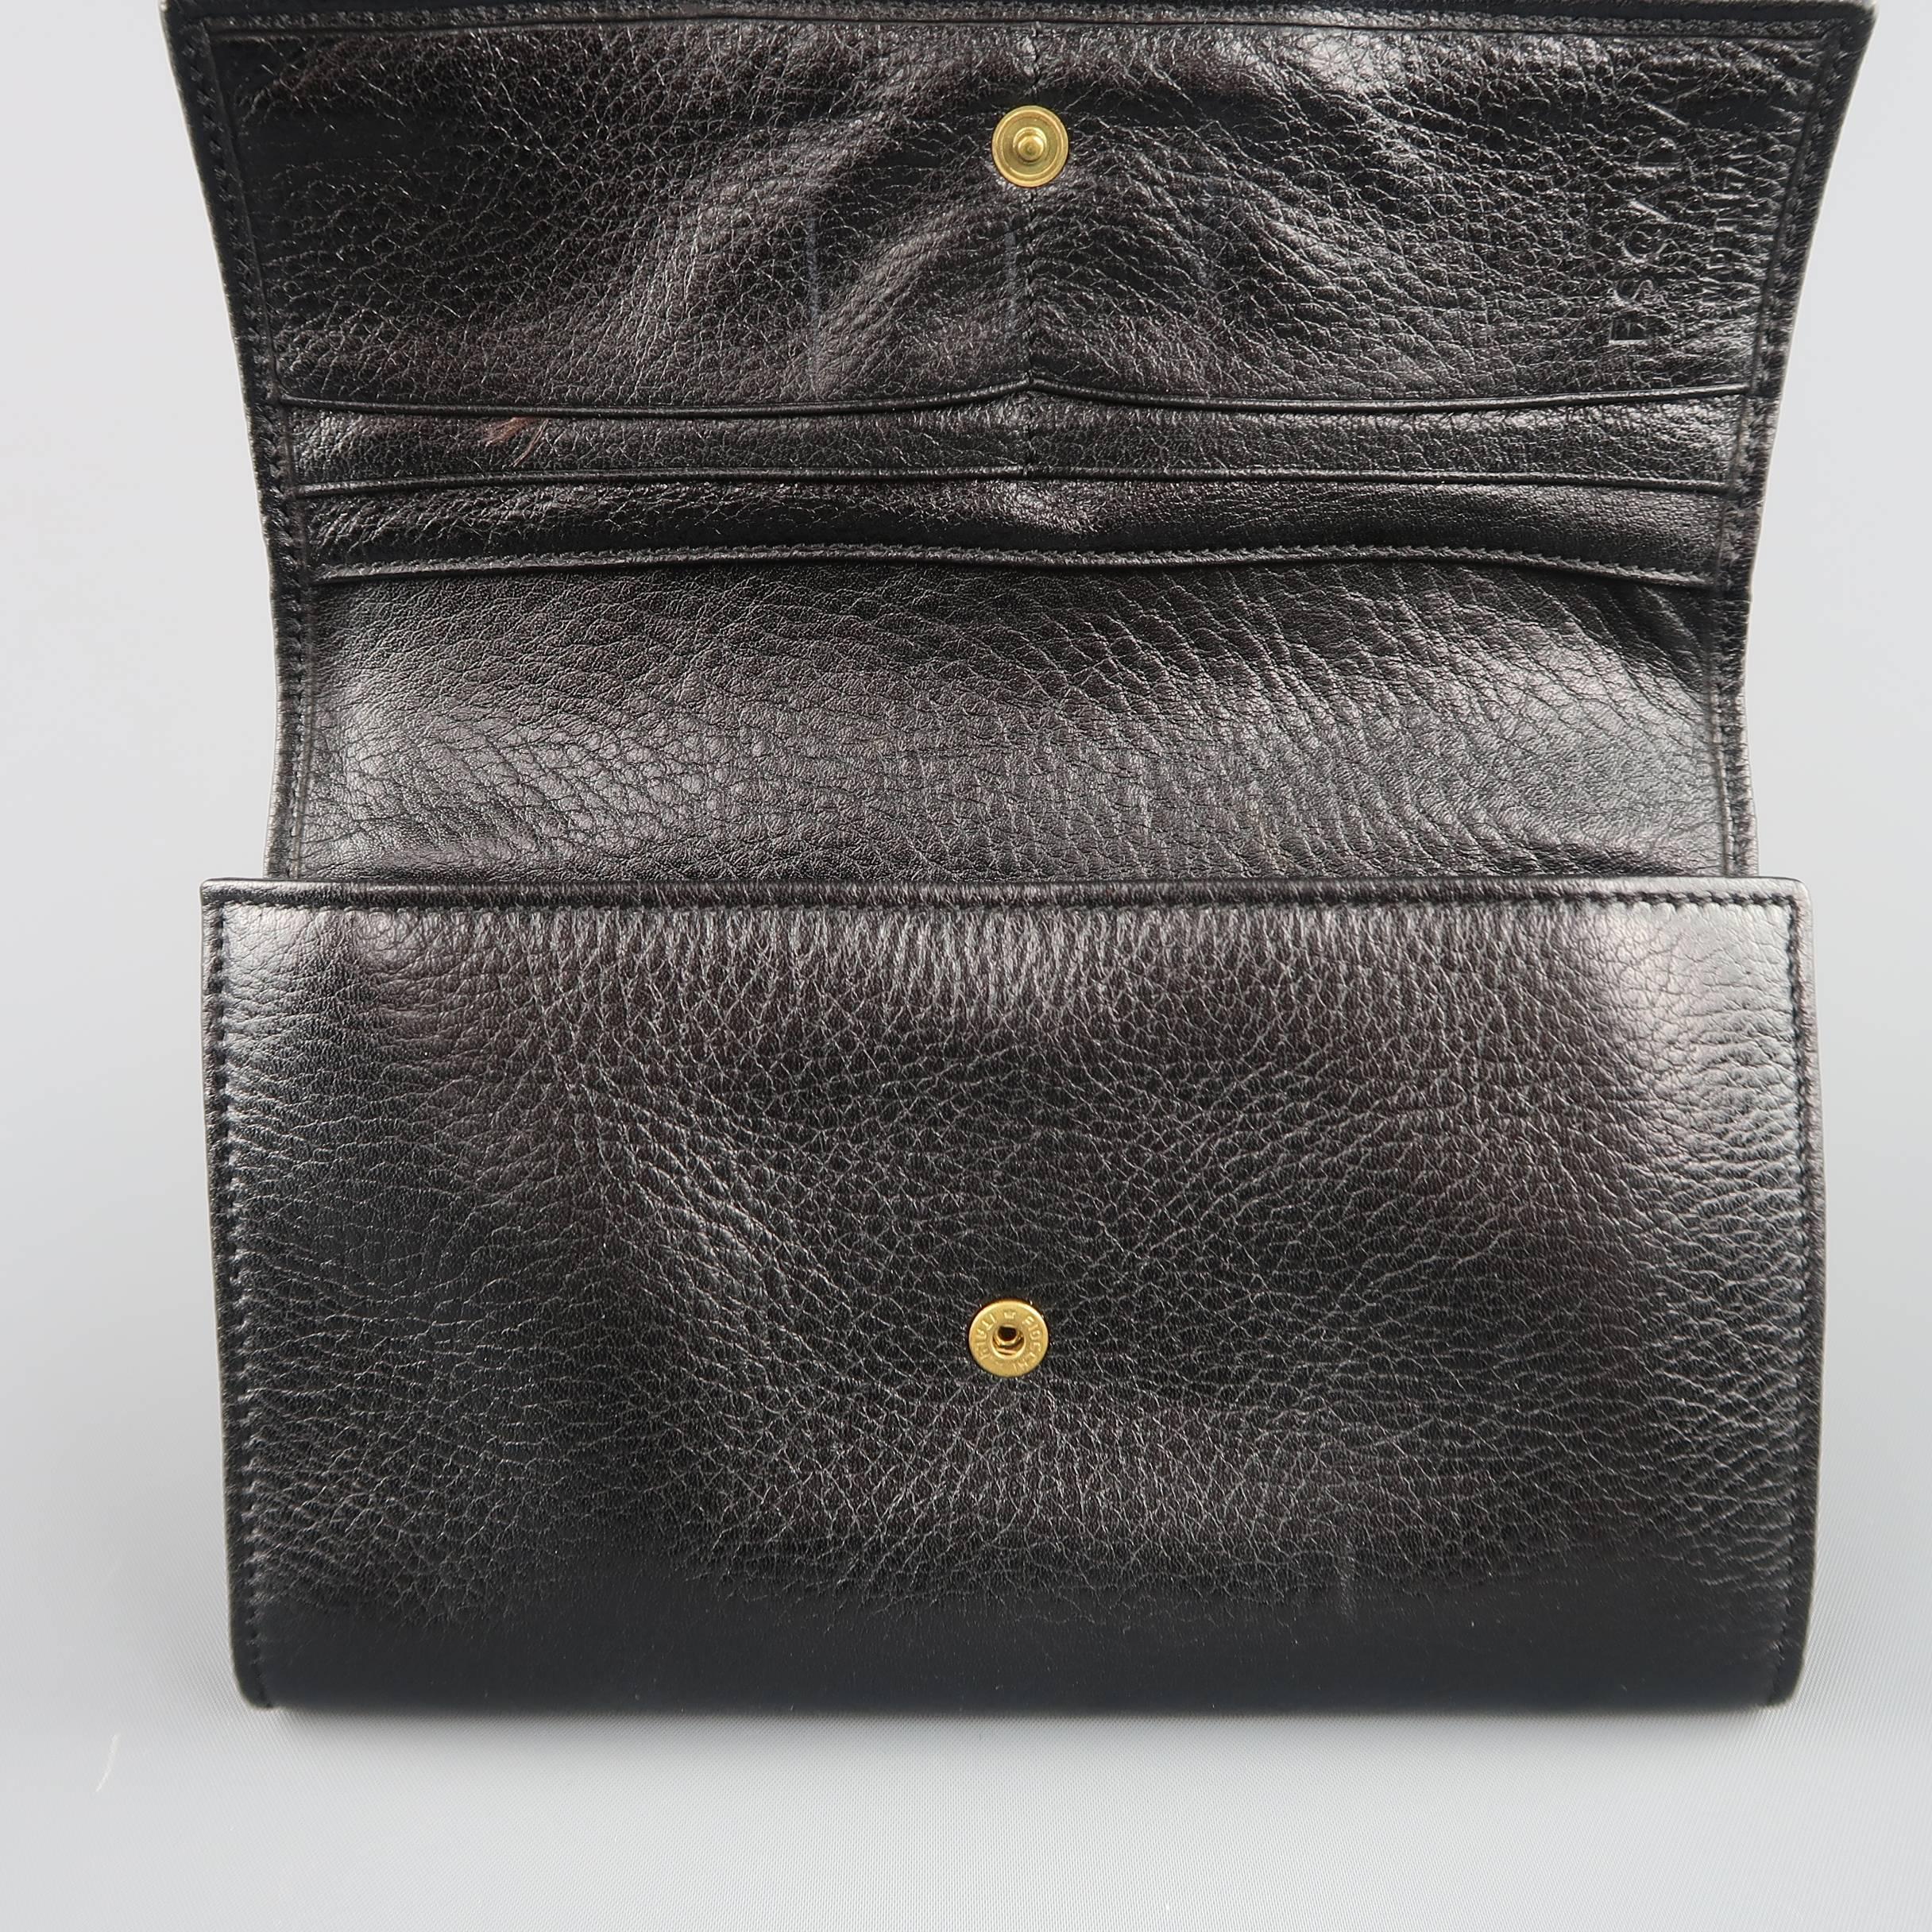  Escada Black Leather Gold Double E Flap Wallet 4